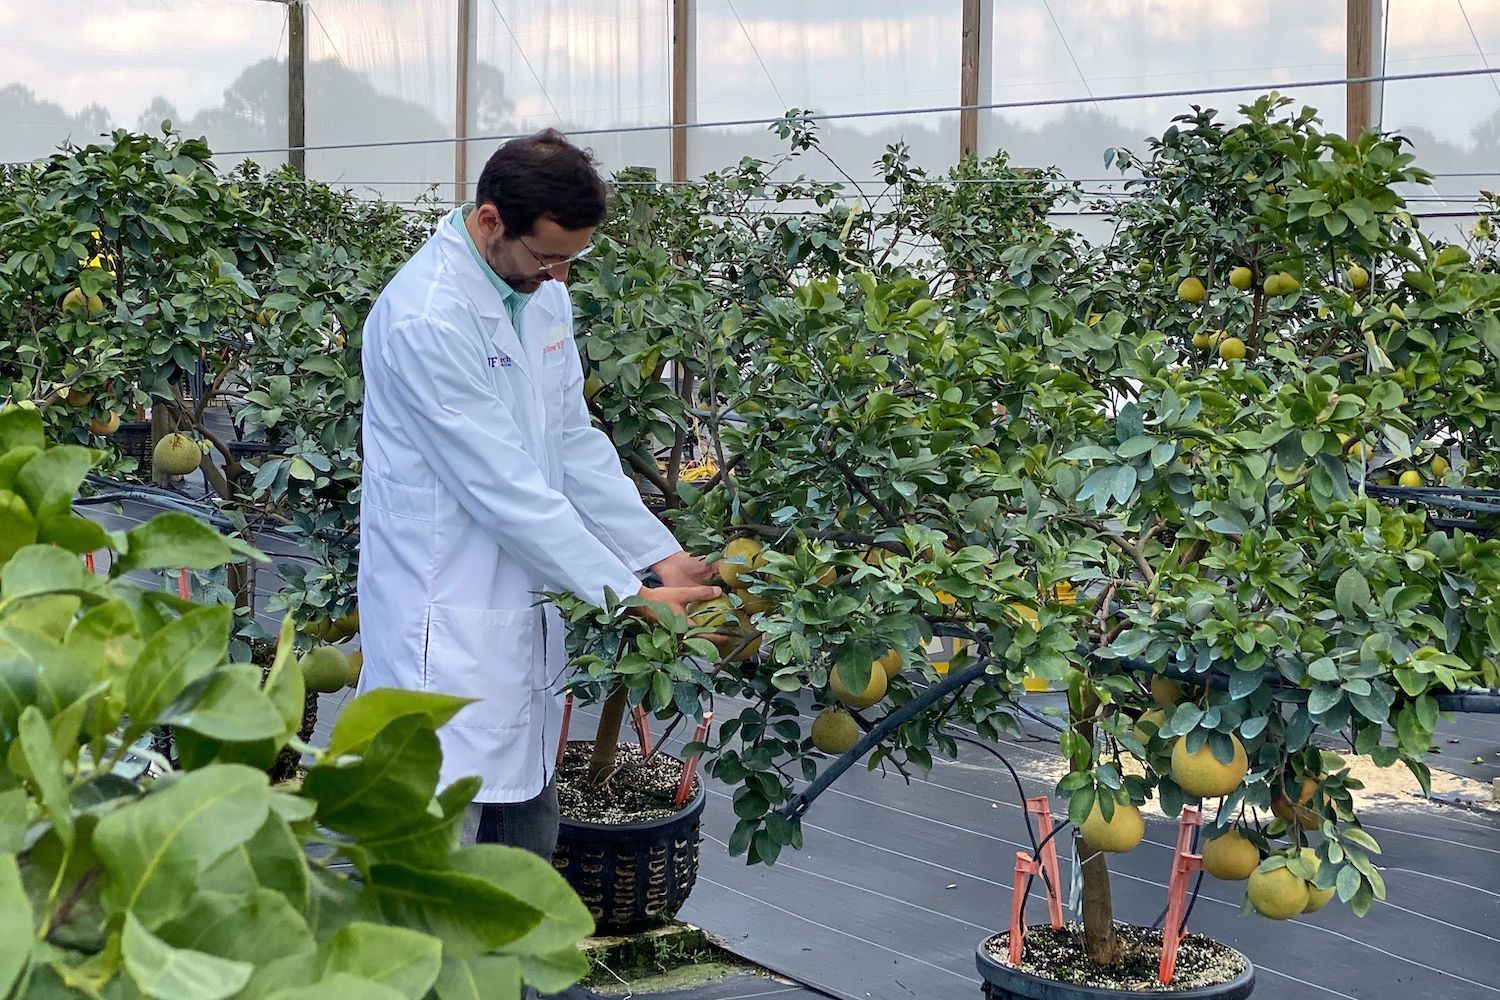 University of Florida researcher Dr. Johnny Ferrarezi inspects citrus fruit at University of Florida research greenhouse in Fort Pierce, Florida on November 19, 2019.